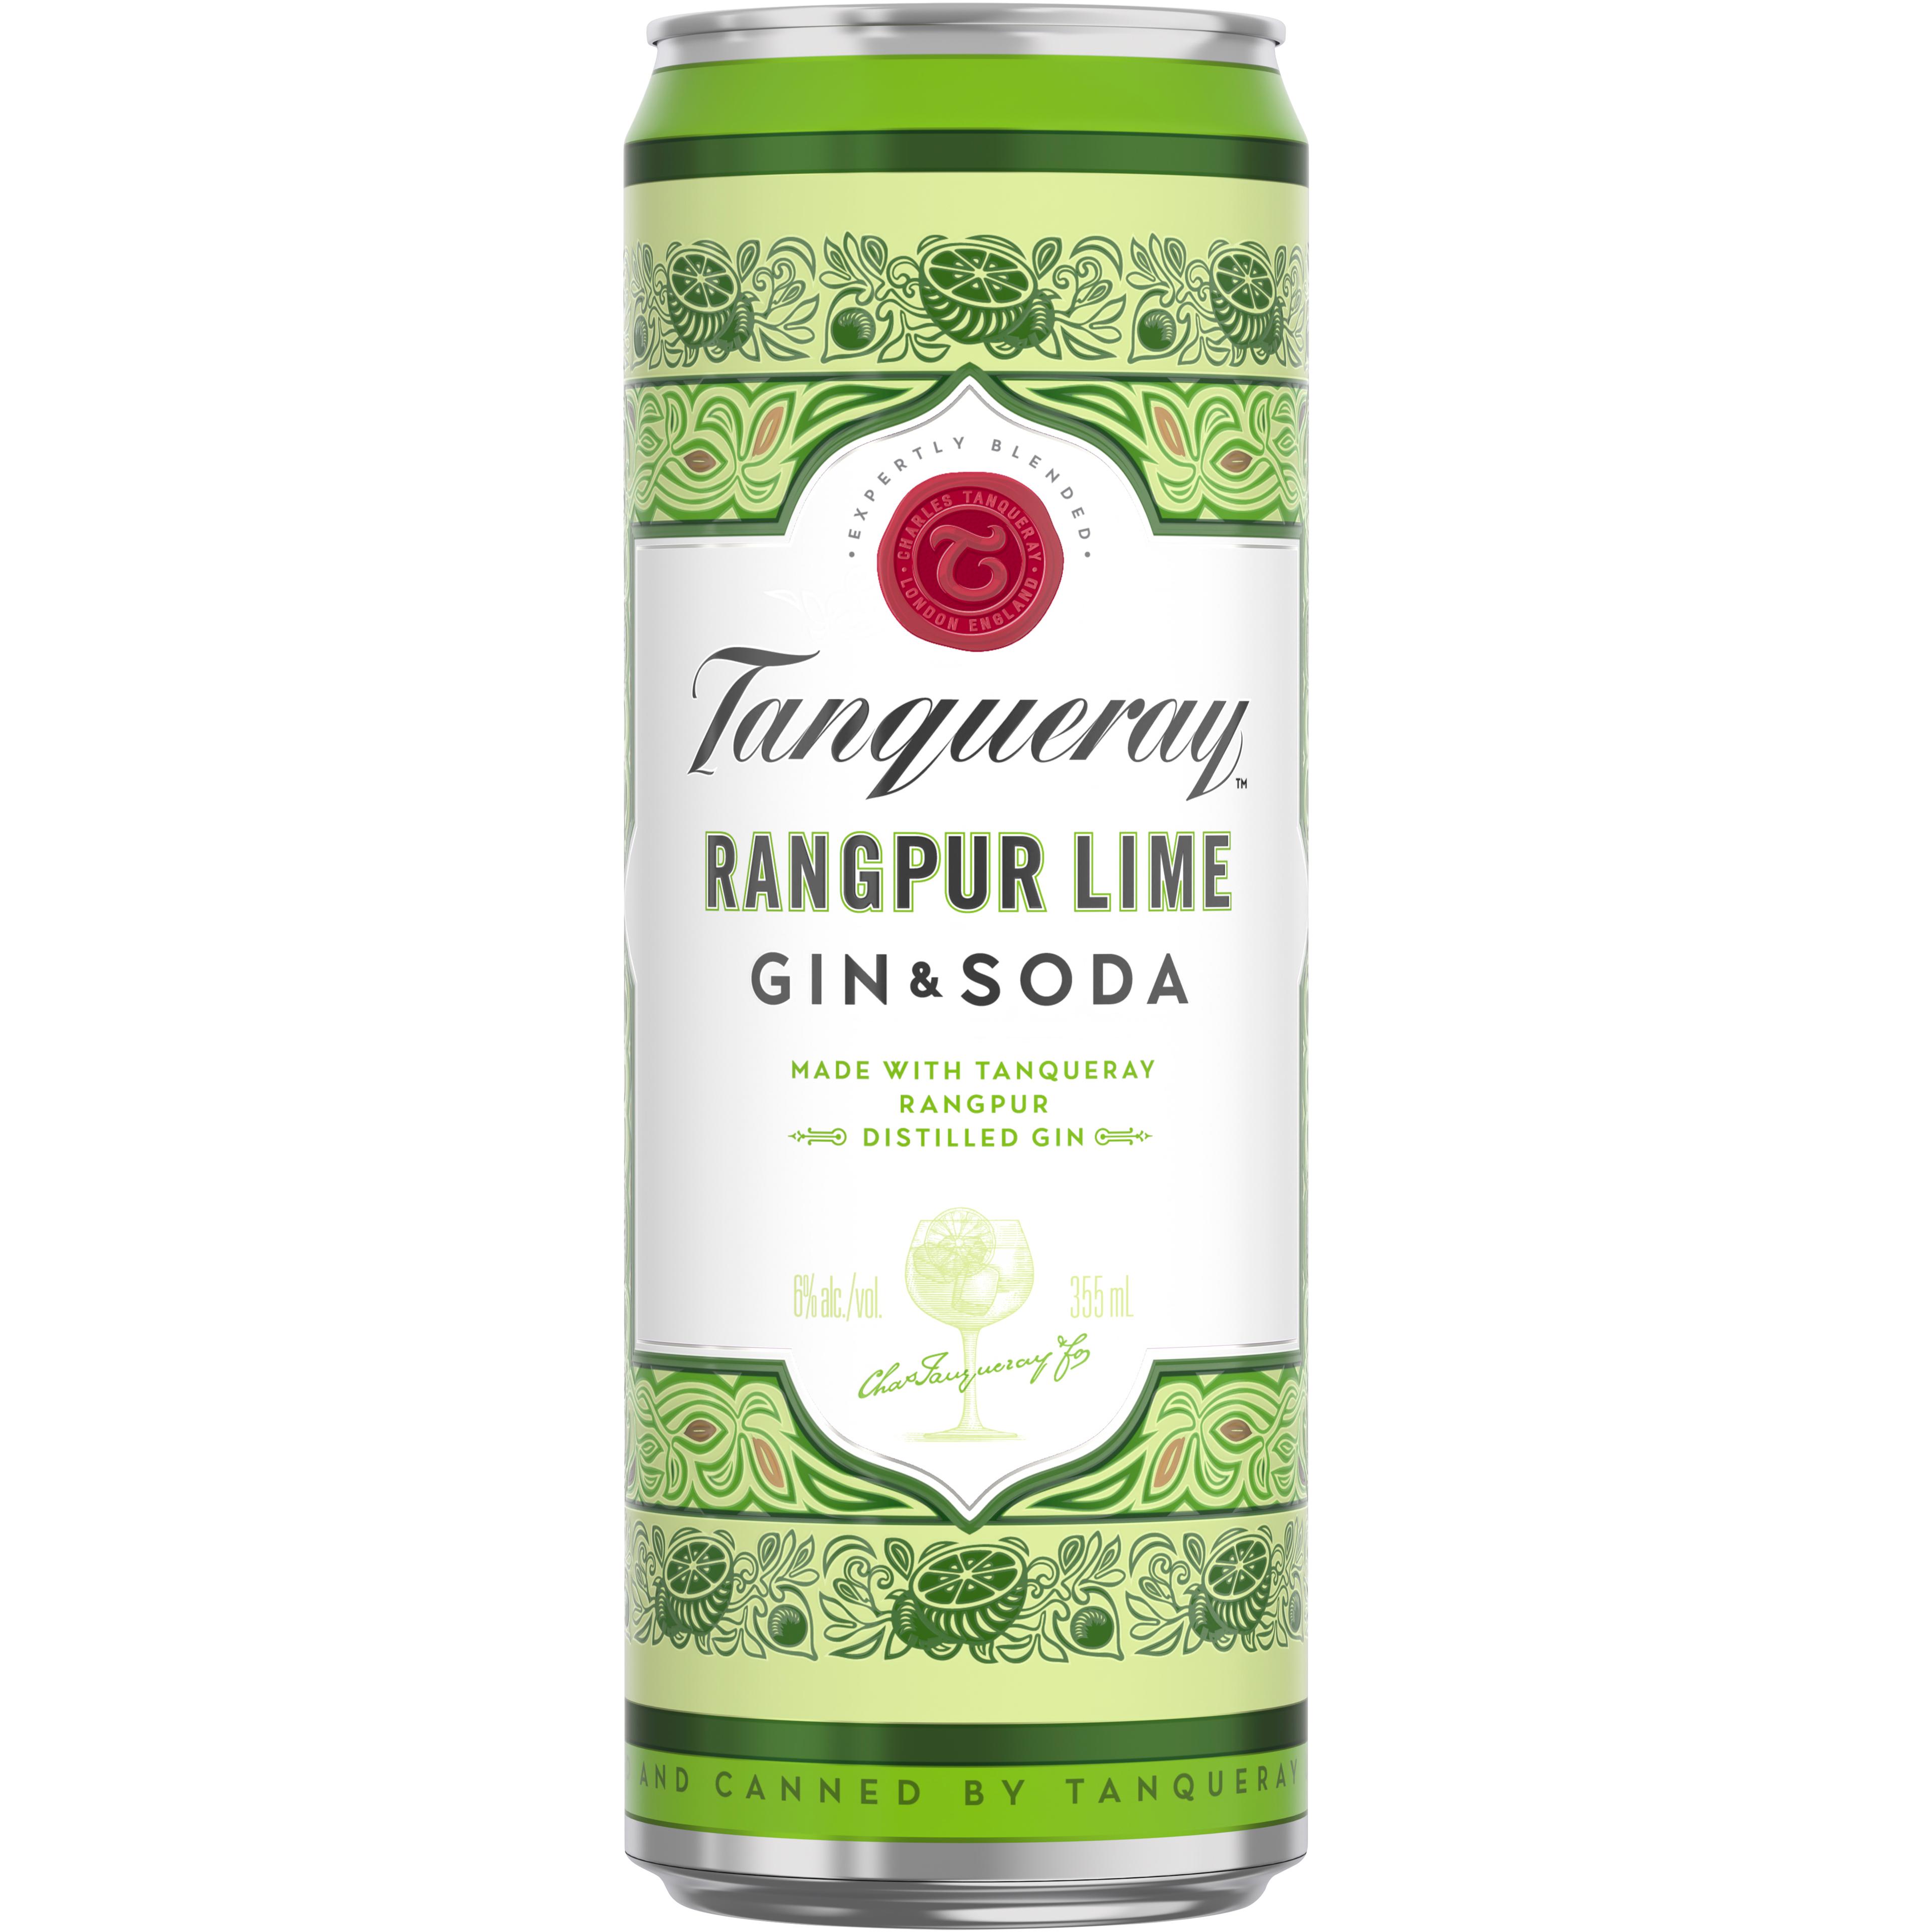 Tanqueray Rangpur Lime Gin & Soda